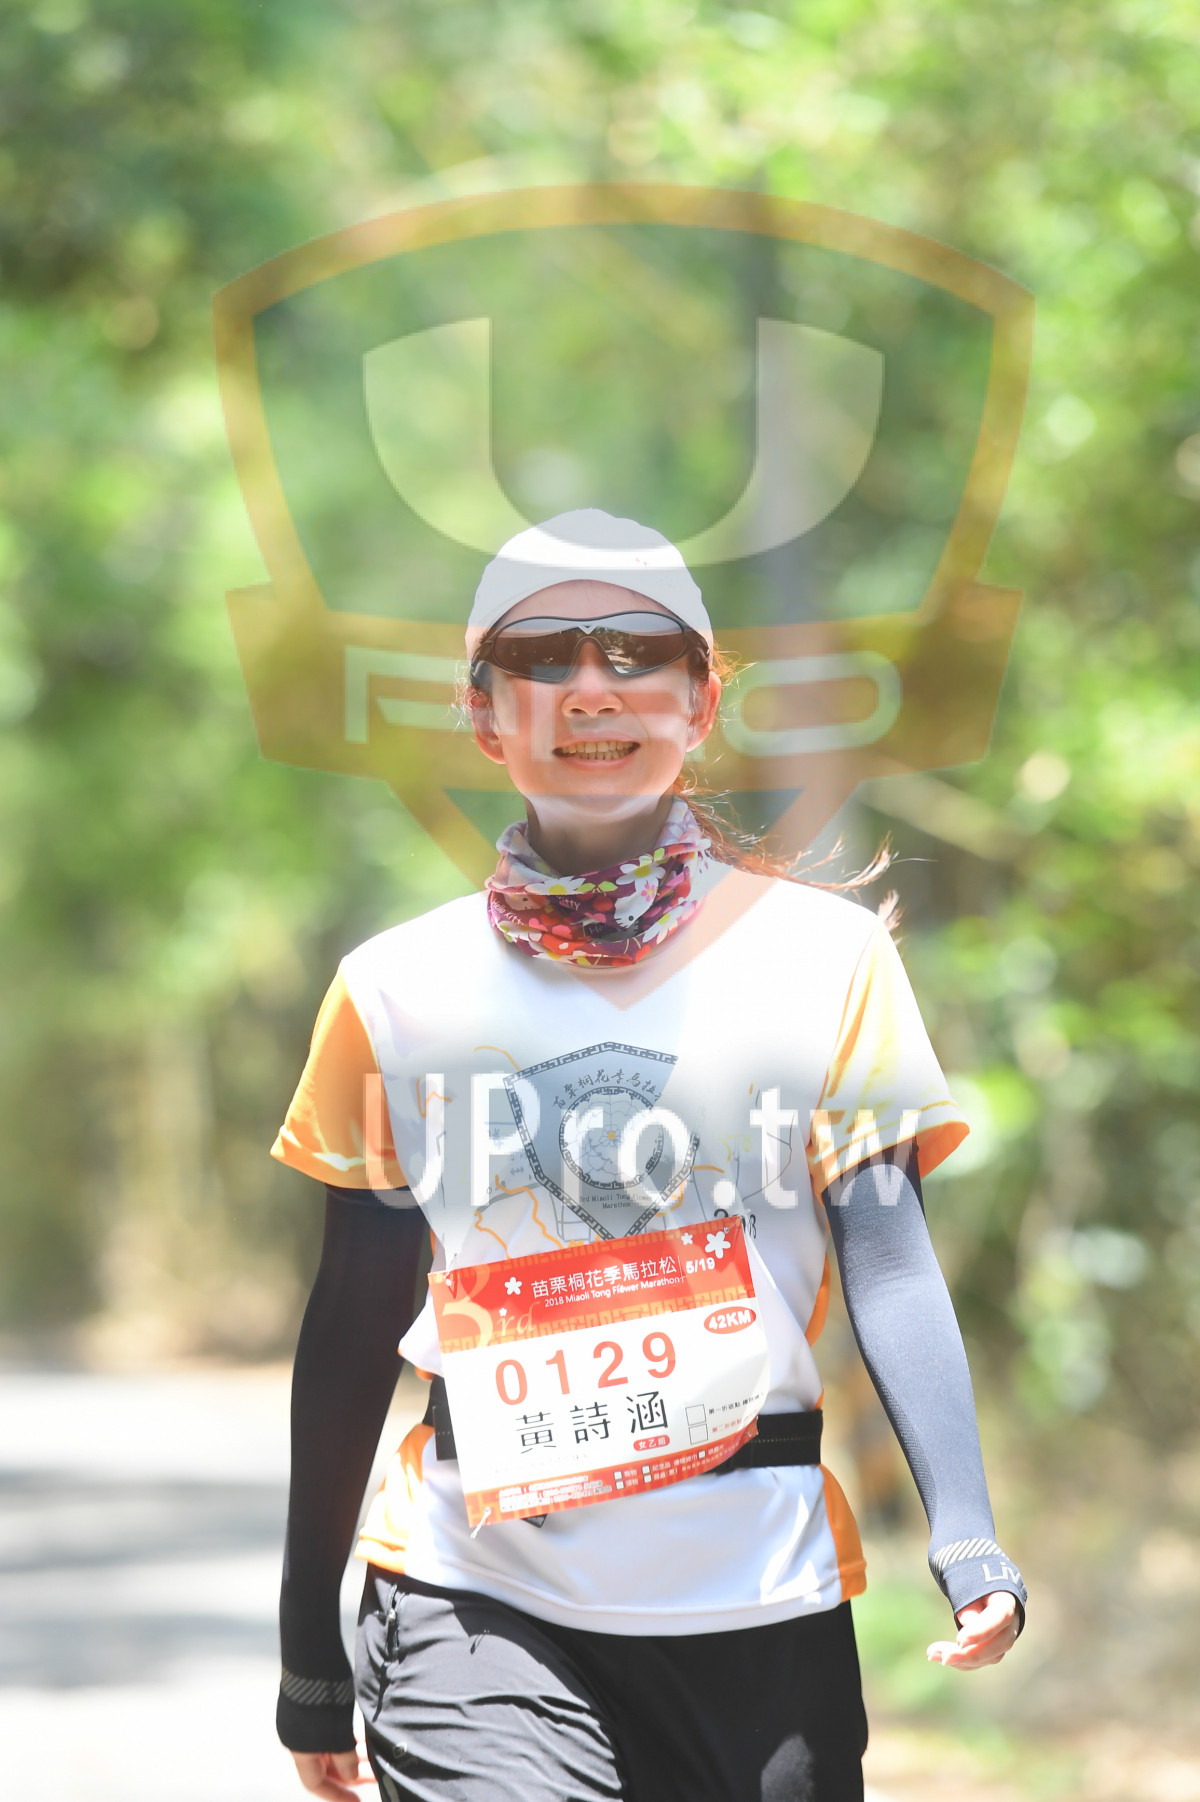 r-,4서,*5,19,2018 Miaol Tong Fiome Marathon,42KM,0129,|綠色隧道3|中年人